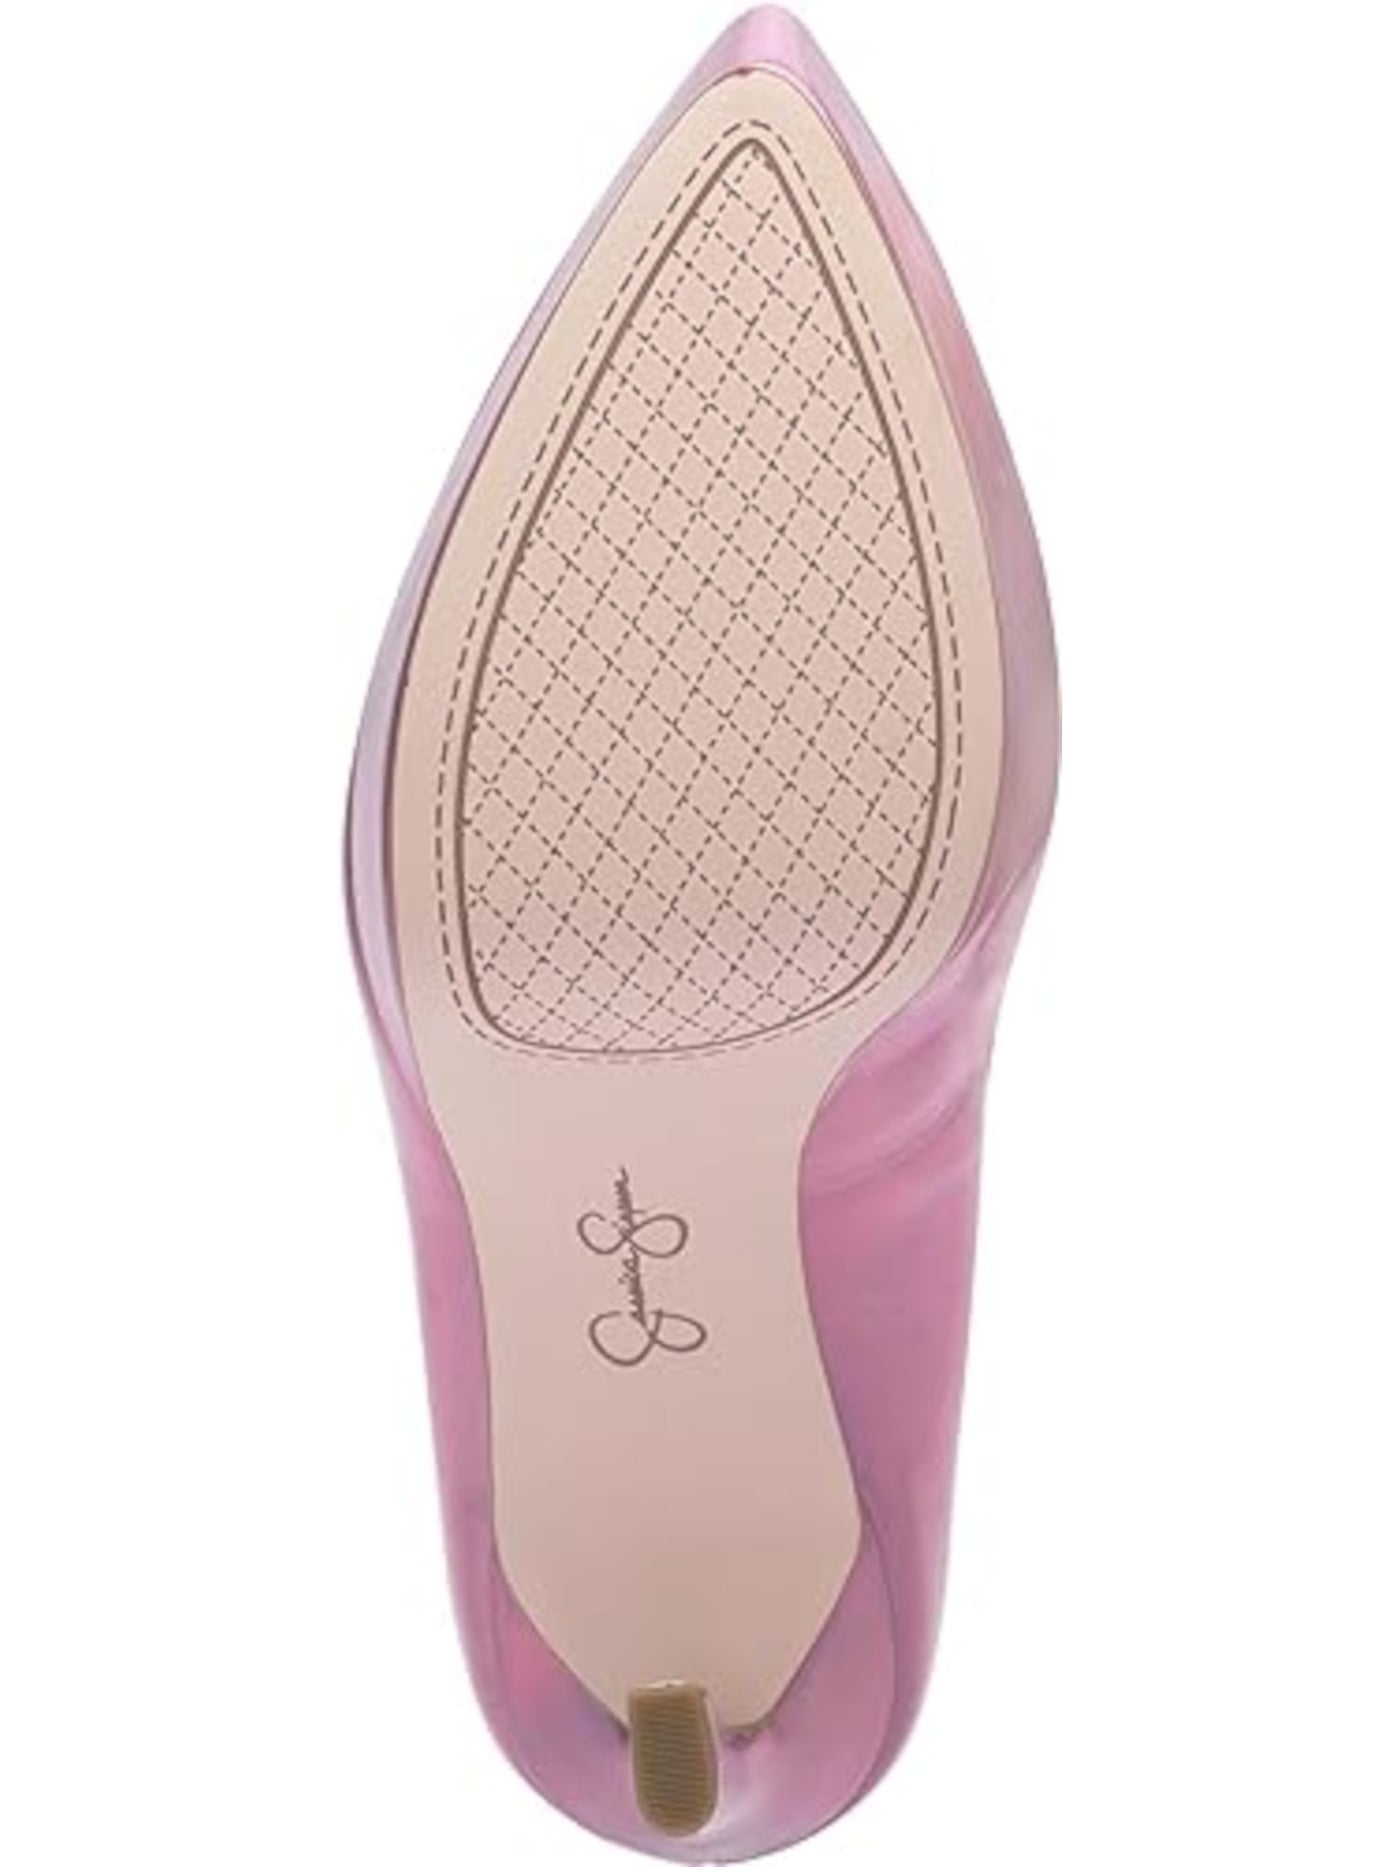 JESSICA SIMPSON Womens Pink 1" Platform Cushioned Jariah Pointed Toe Platform Slip On Dress Pumps Shoes M